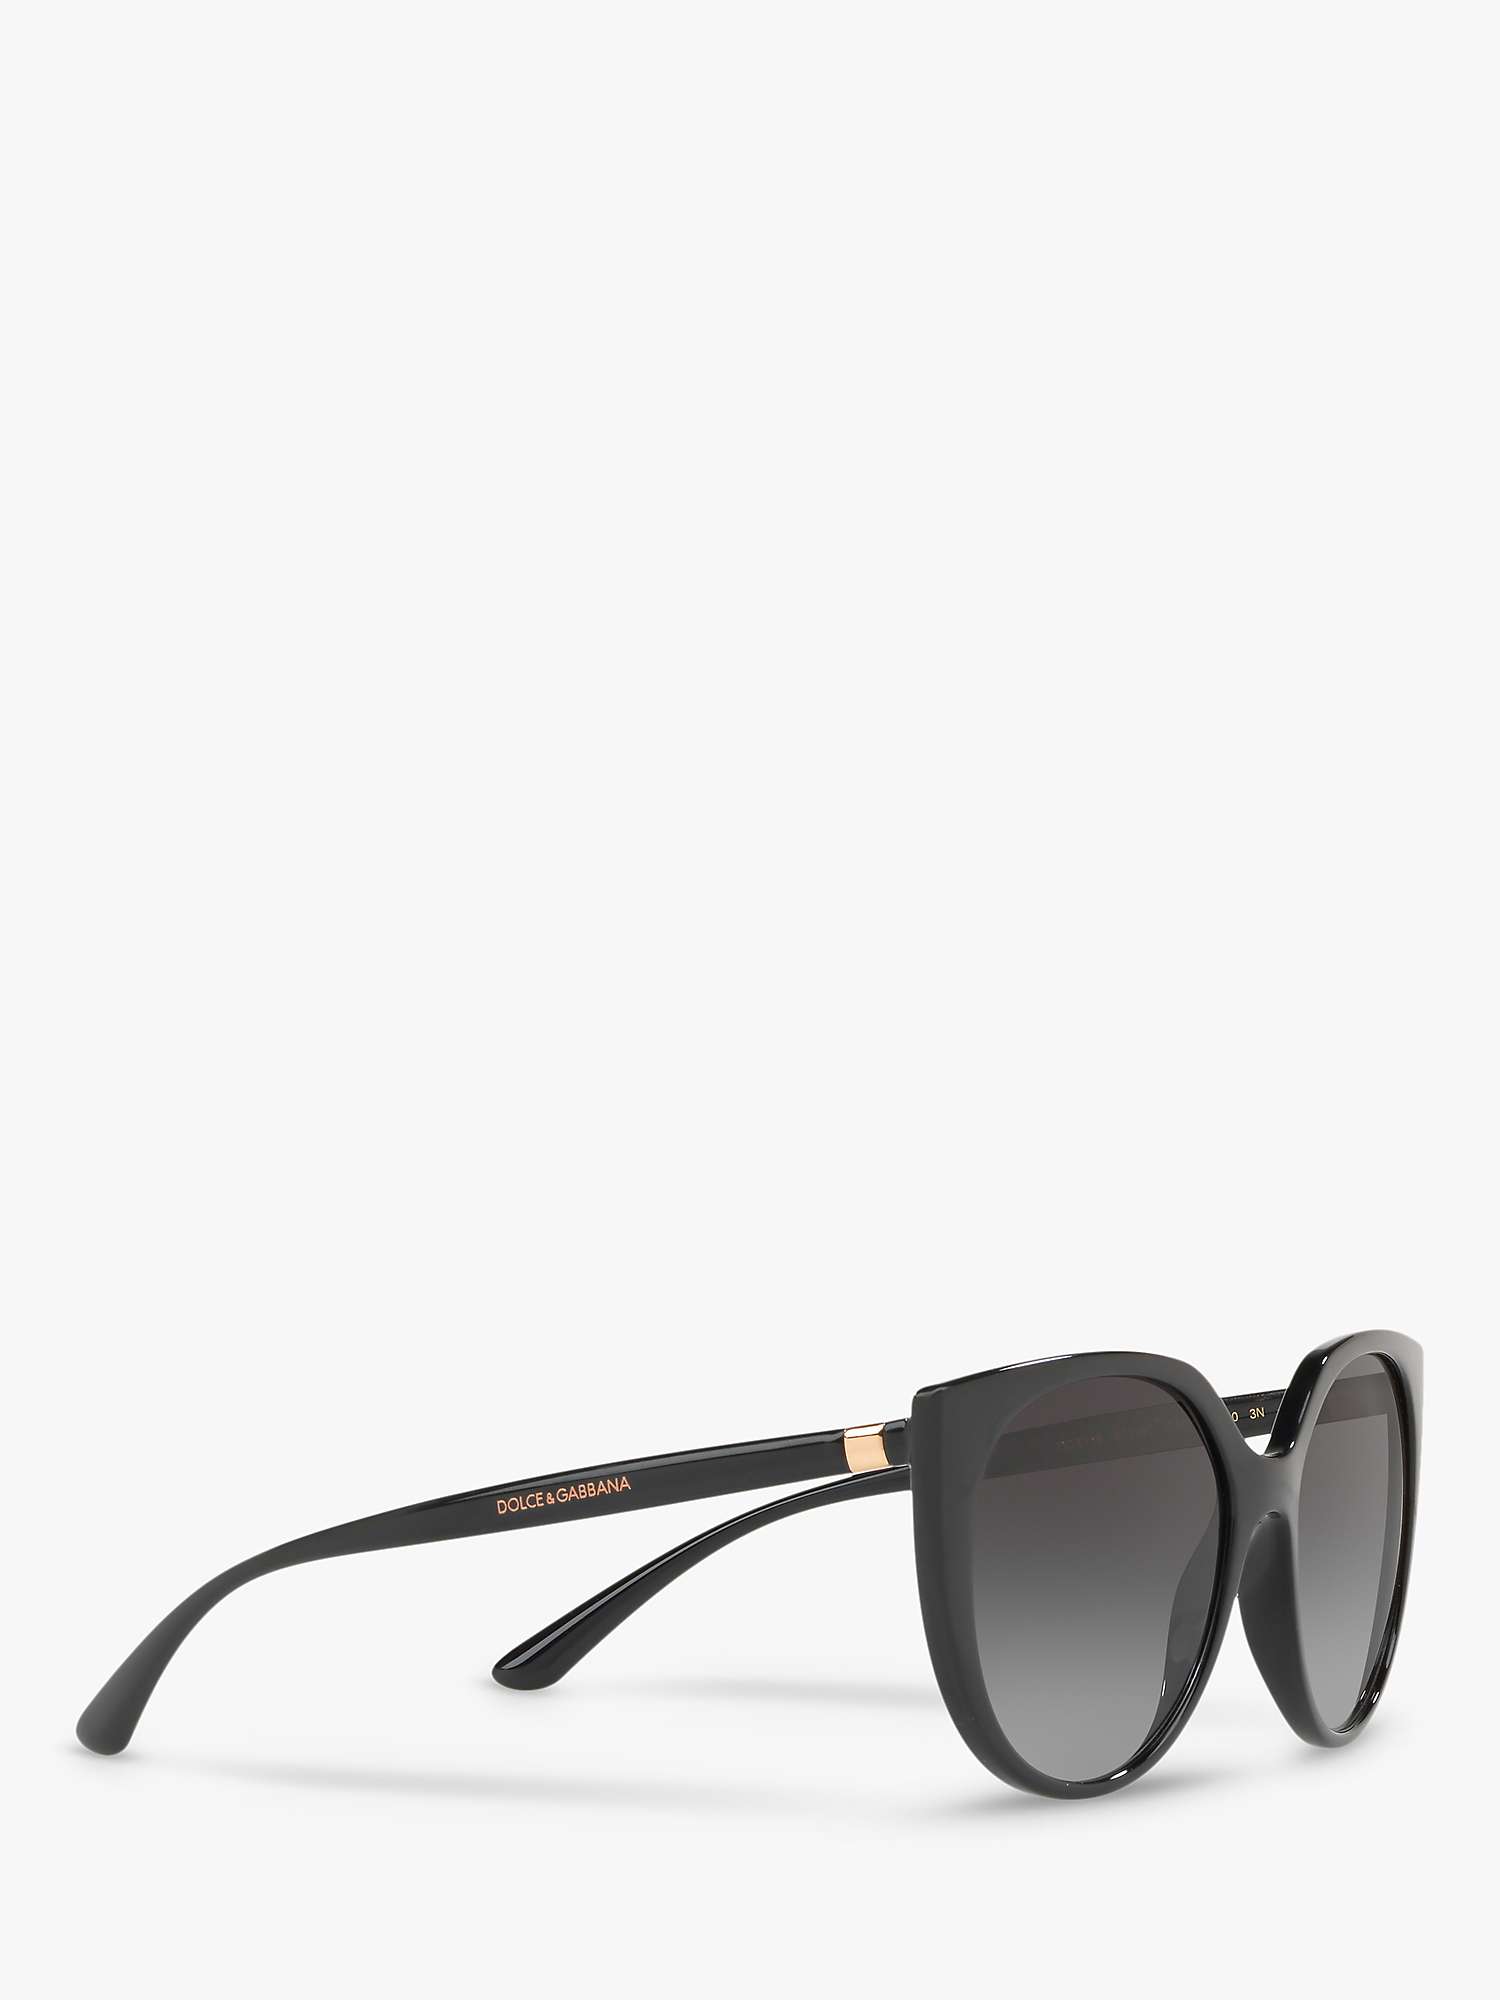 Buy Dolce & Gabbana DG6119 Women's Oval Sunglasses, Matte Black/Grey Gradient Online at johnlewis.com